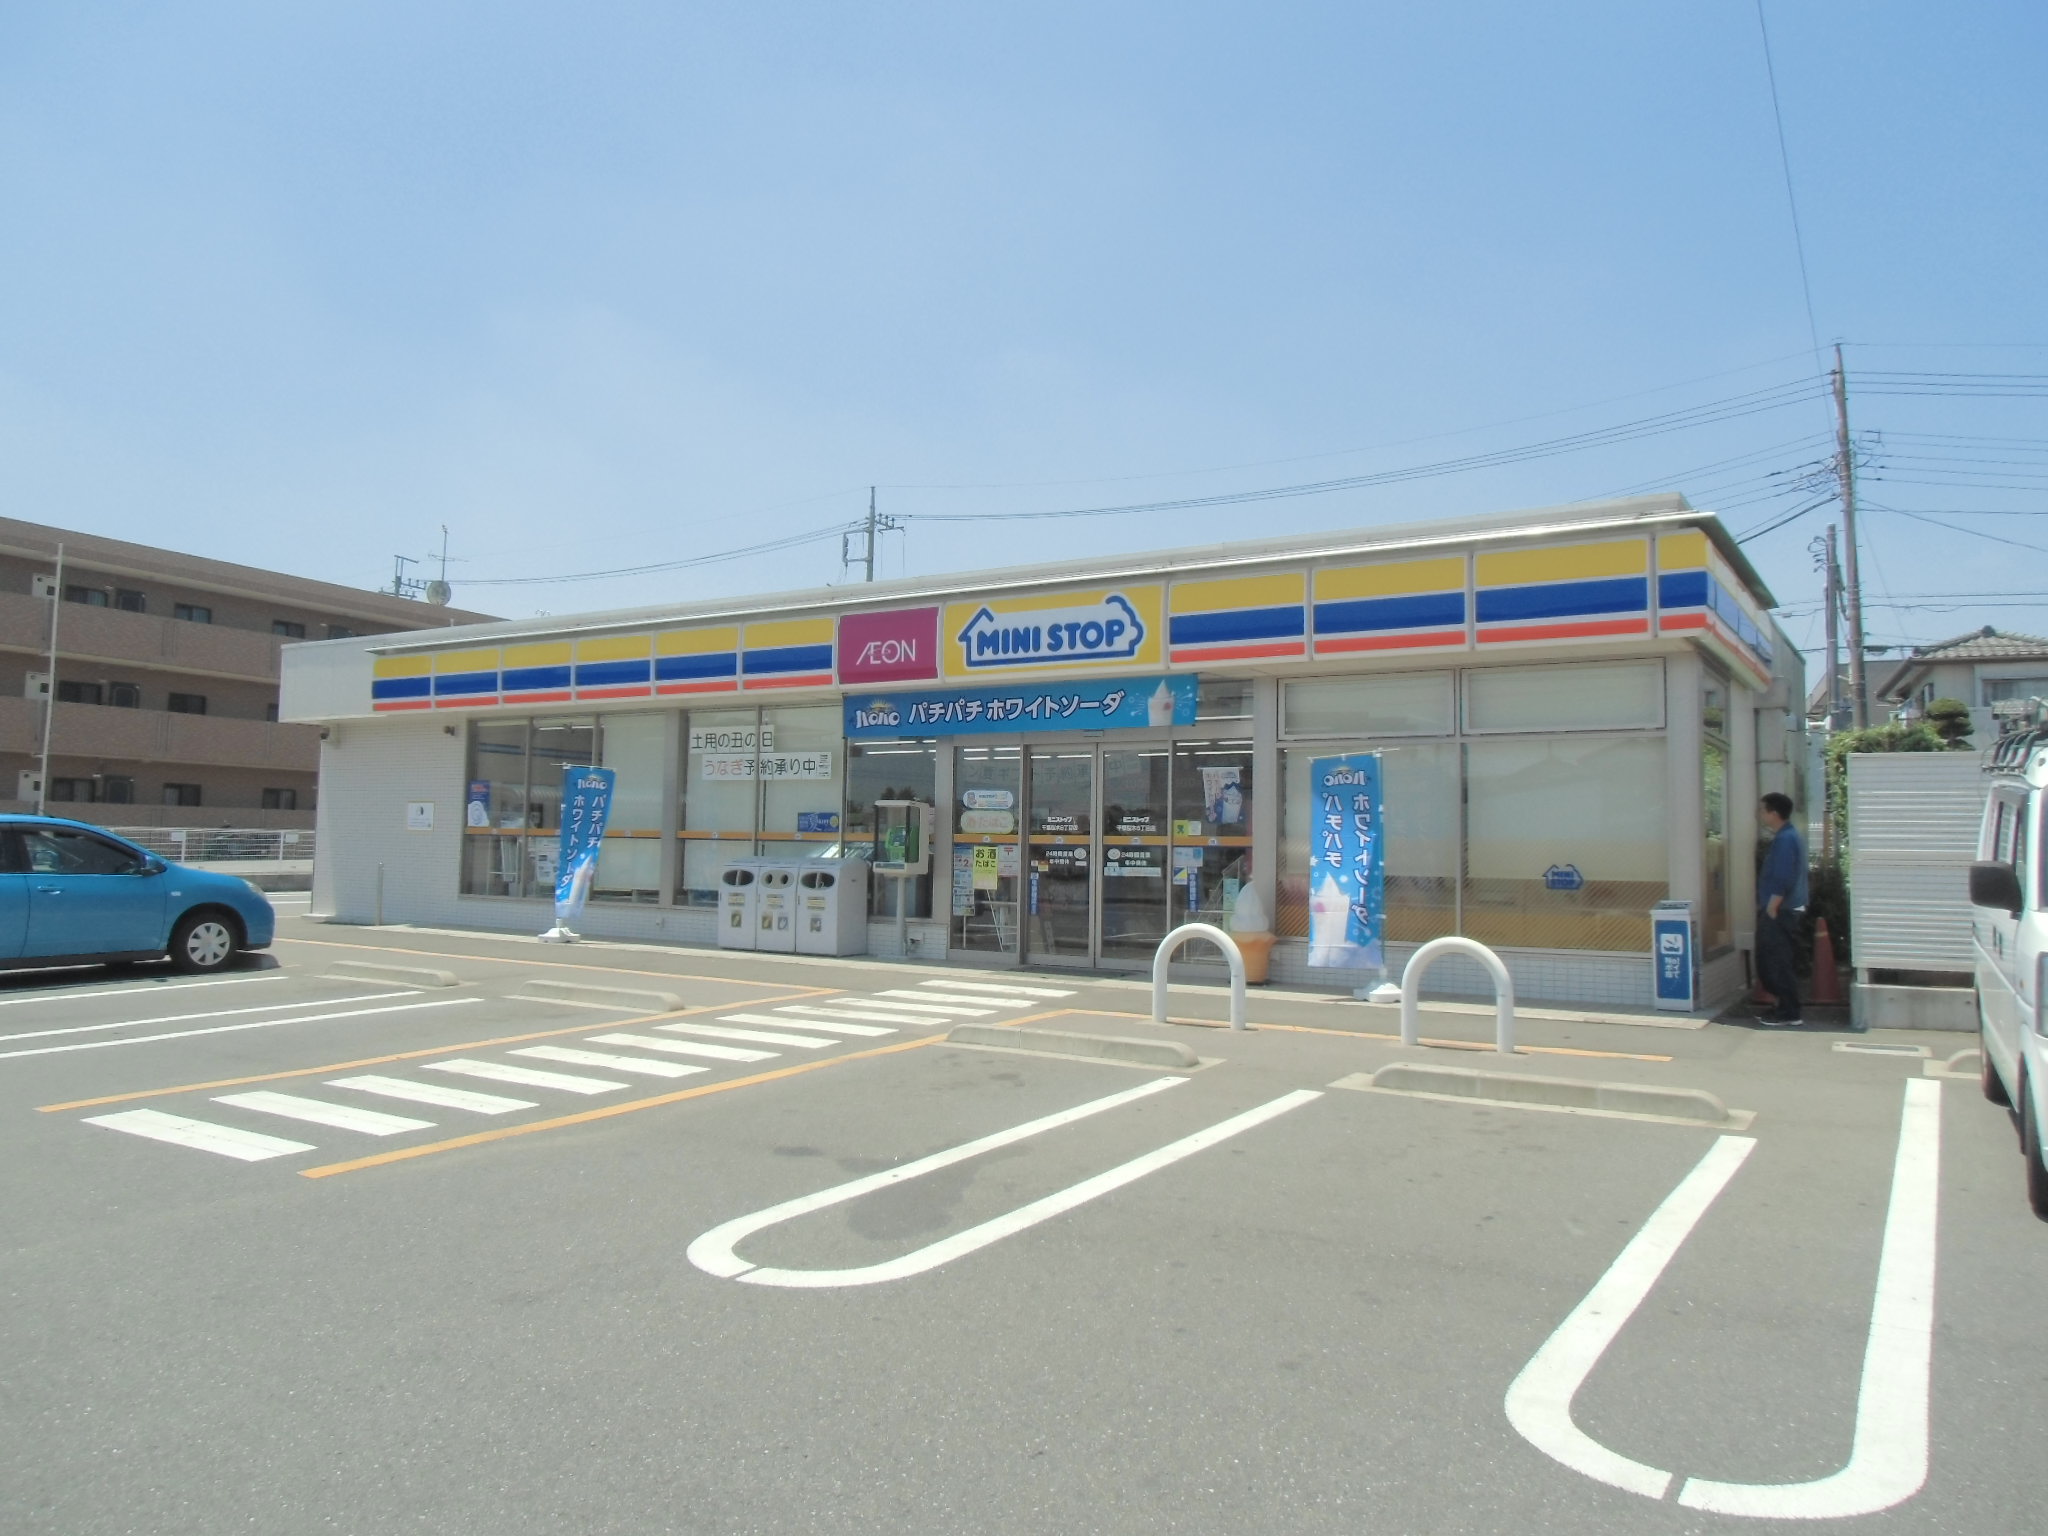 Convenience store. MINISTOP Chiba Sakuragi 6-chome up (convenience store) 642m